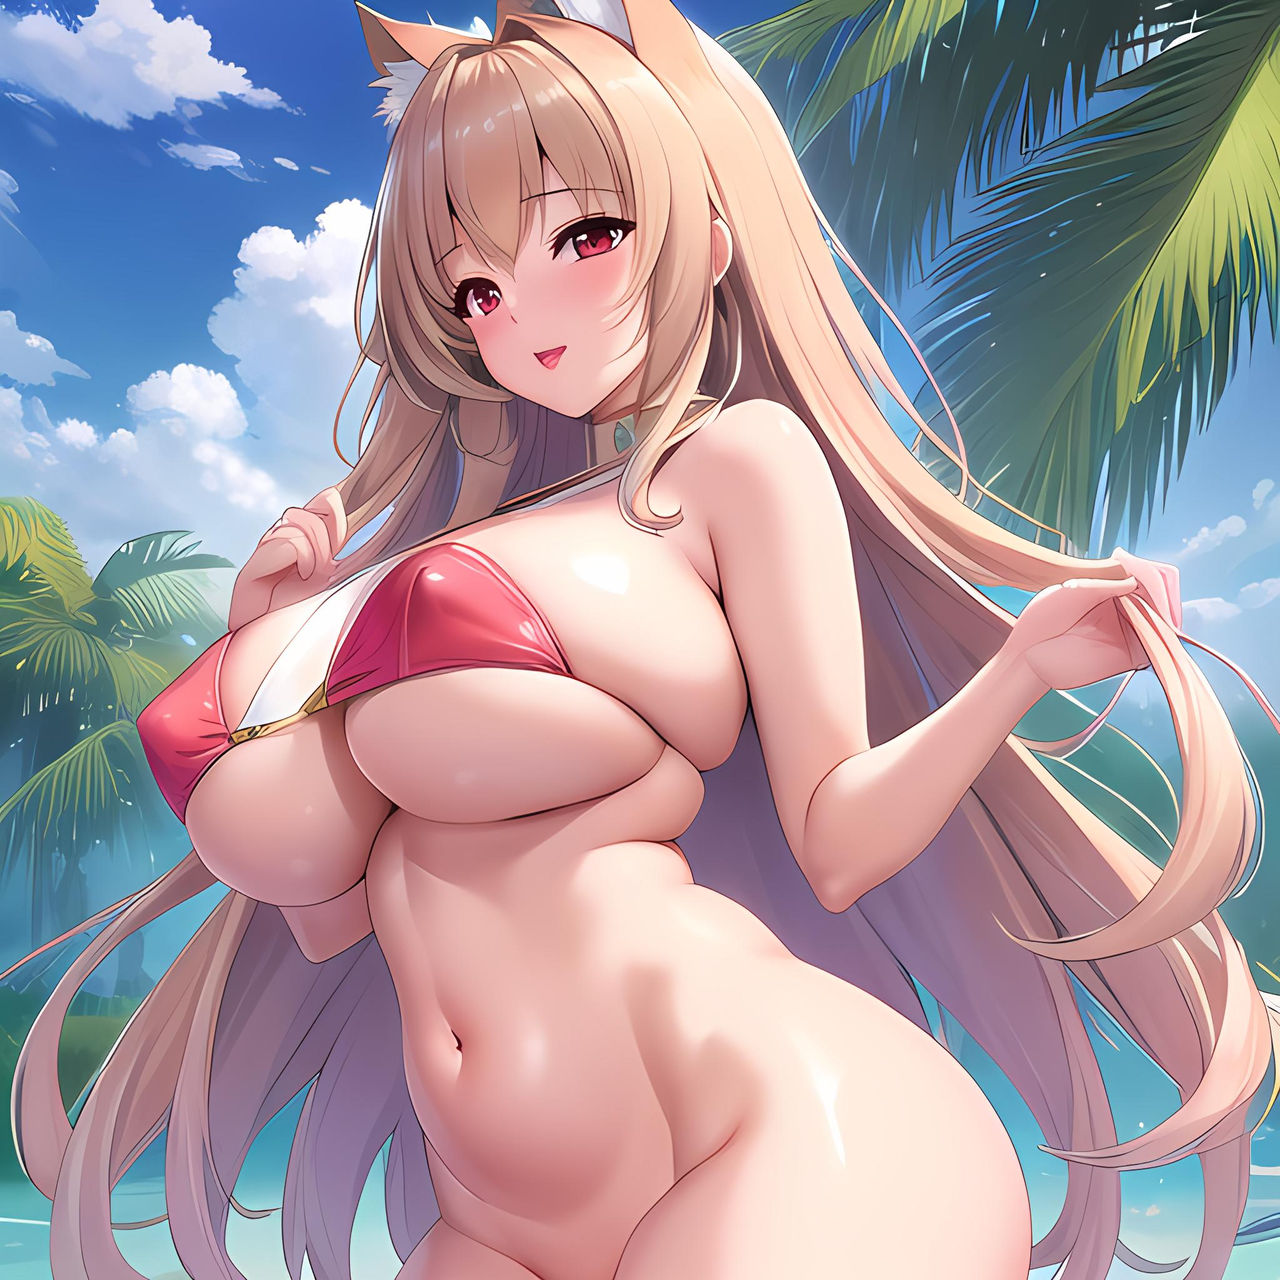 Huge anime tits by Surgencylol on DeviantArt